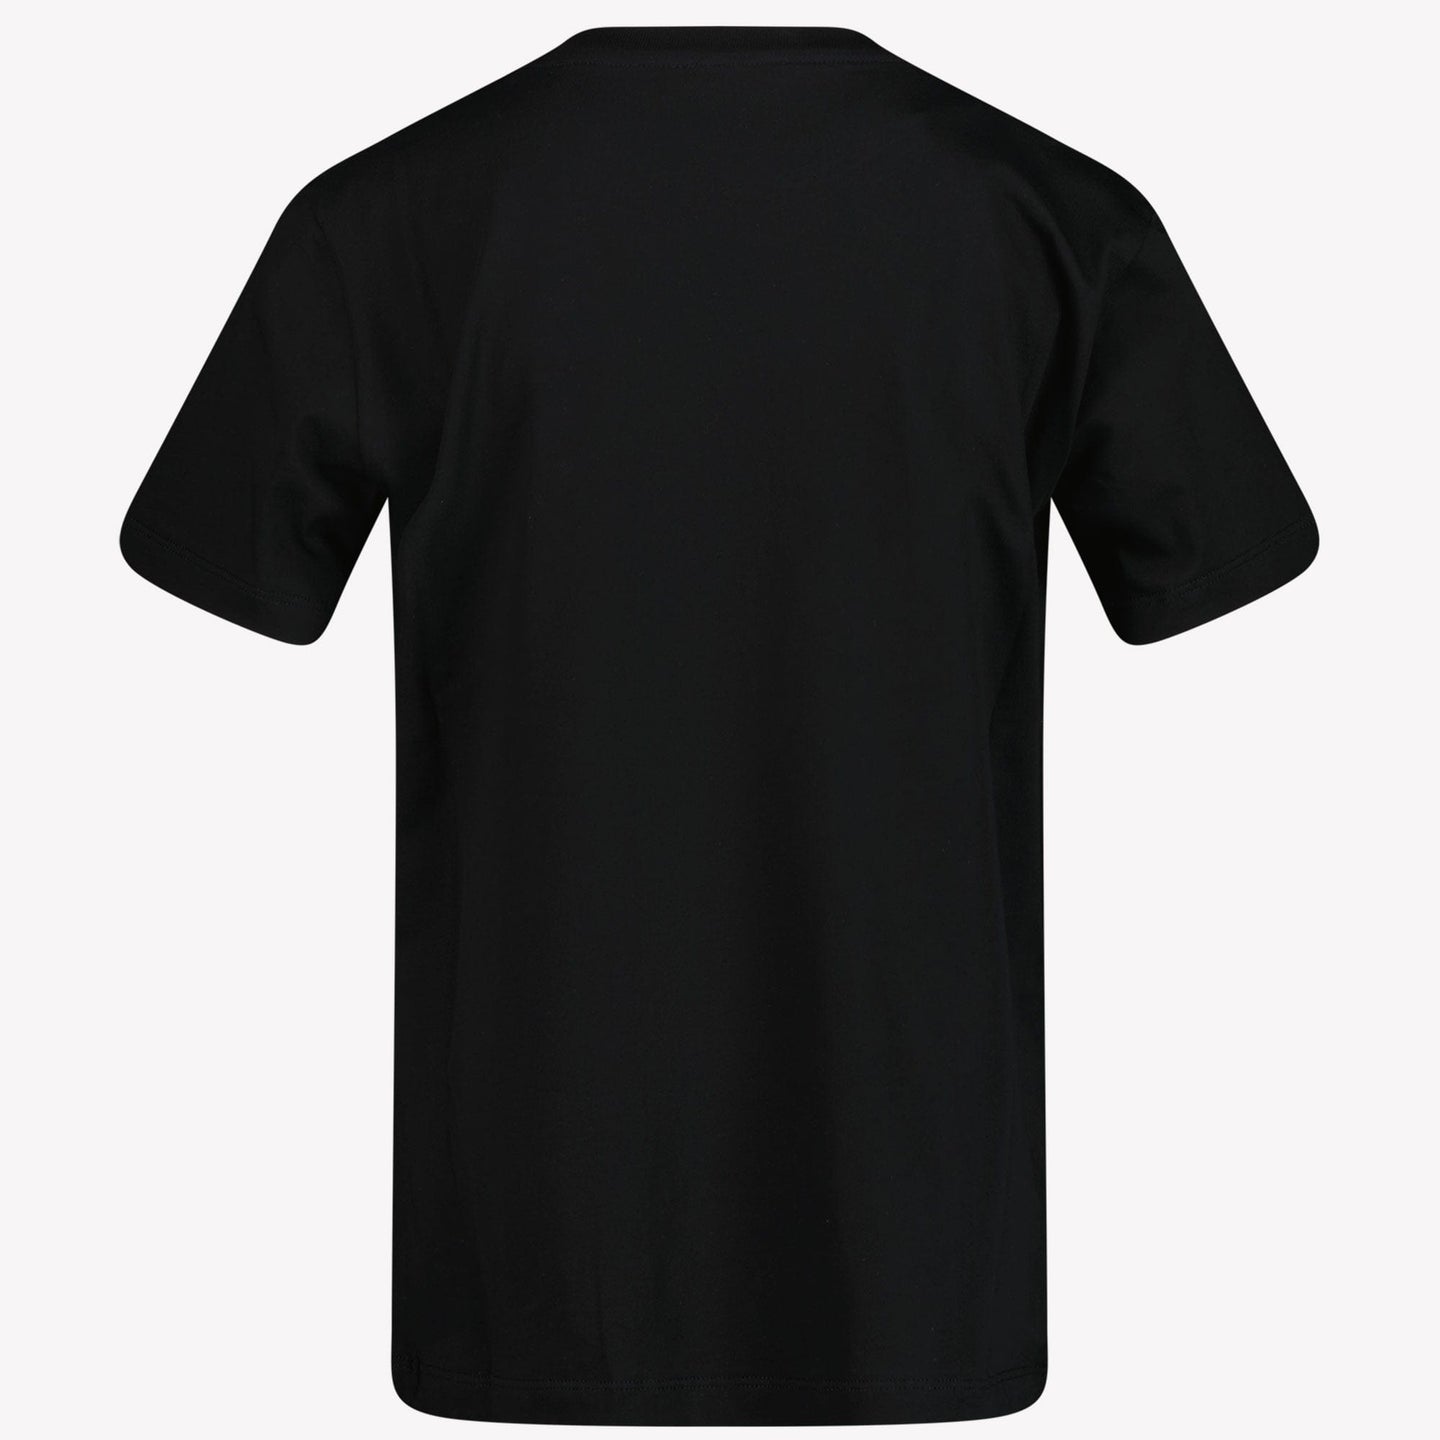 Balmain T-shirt unissex preto